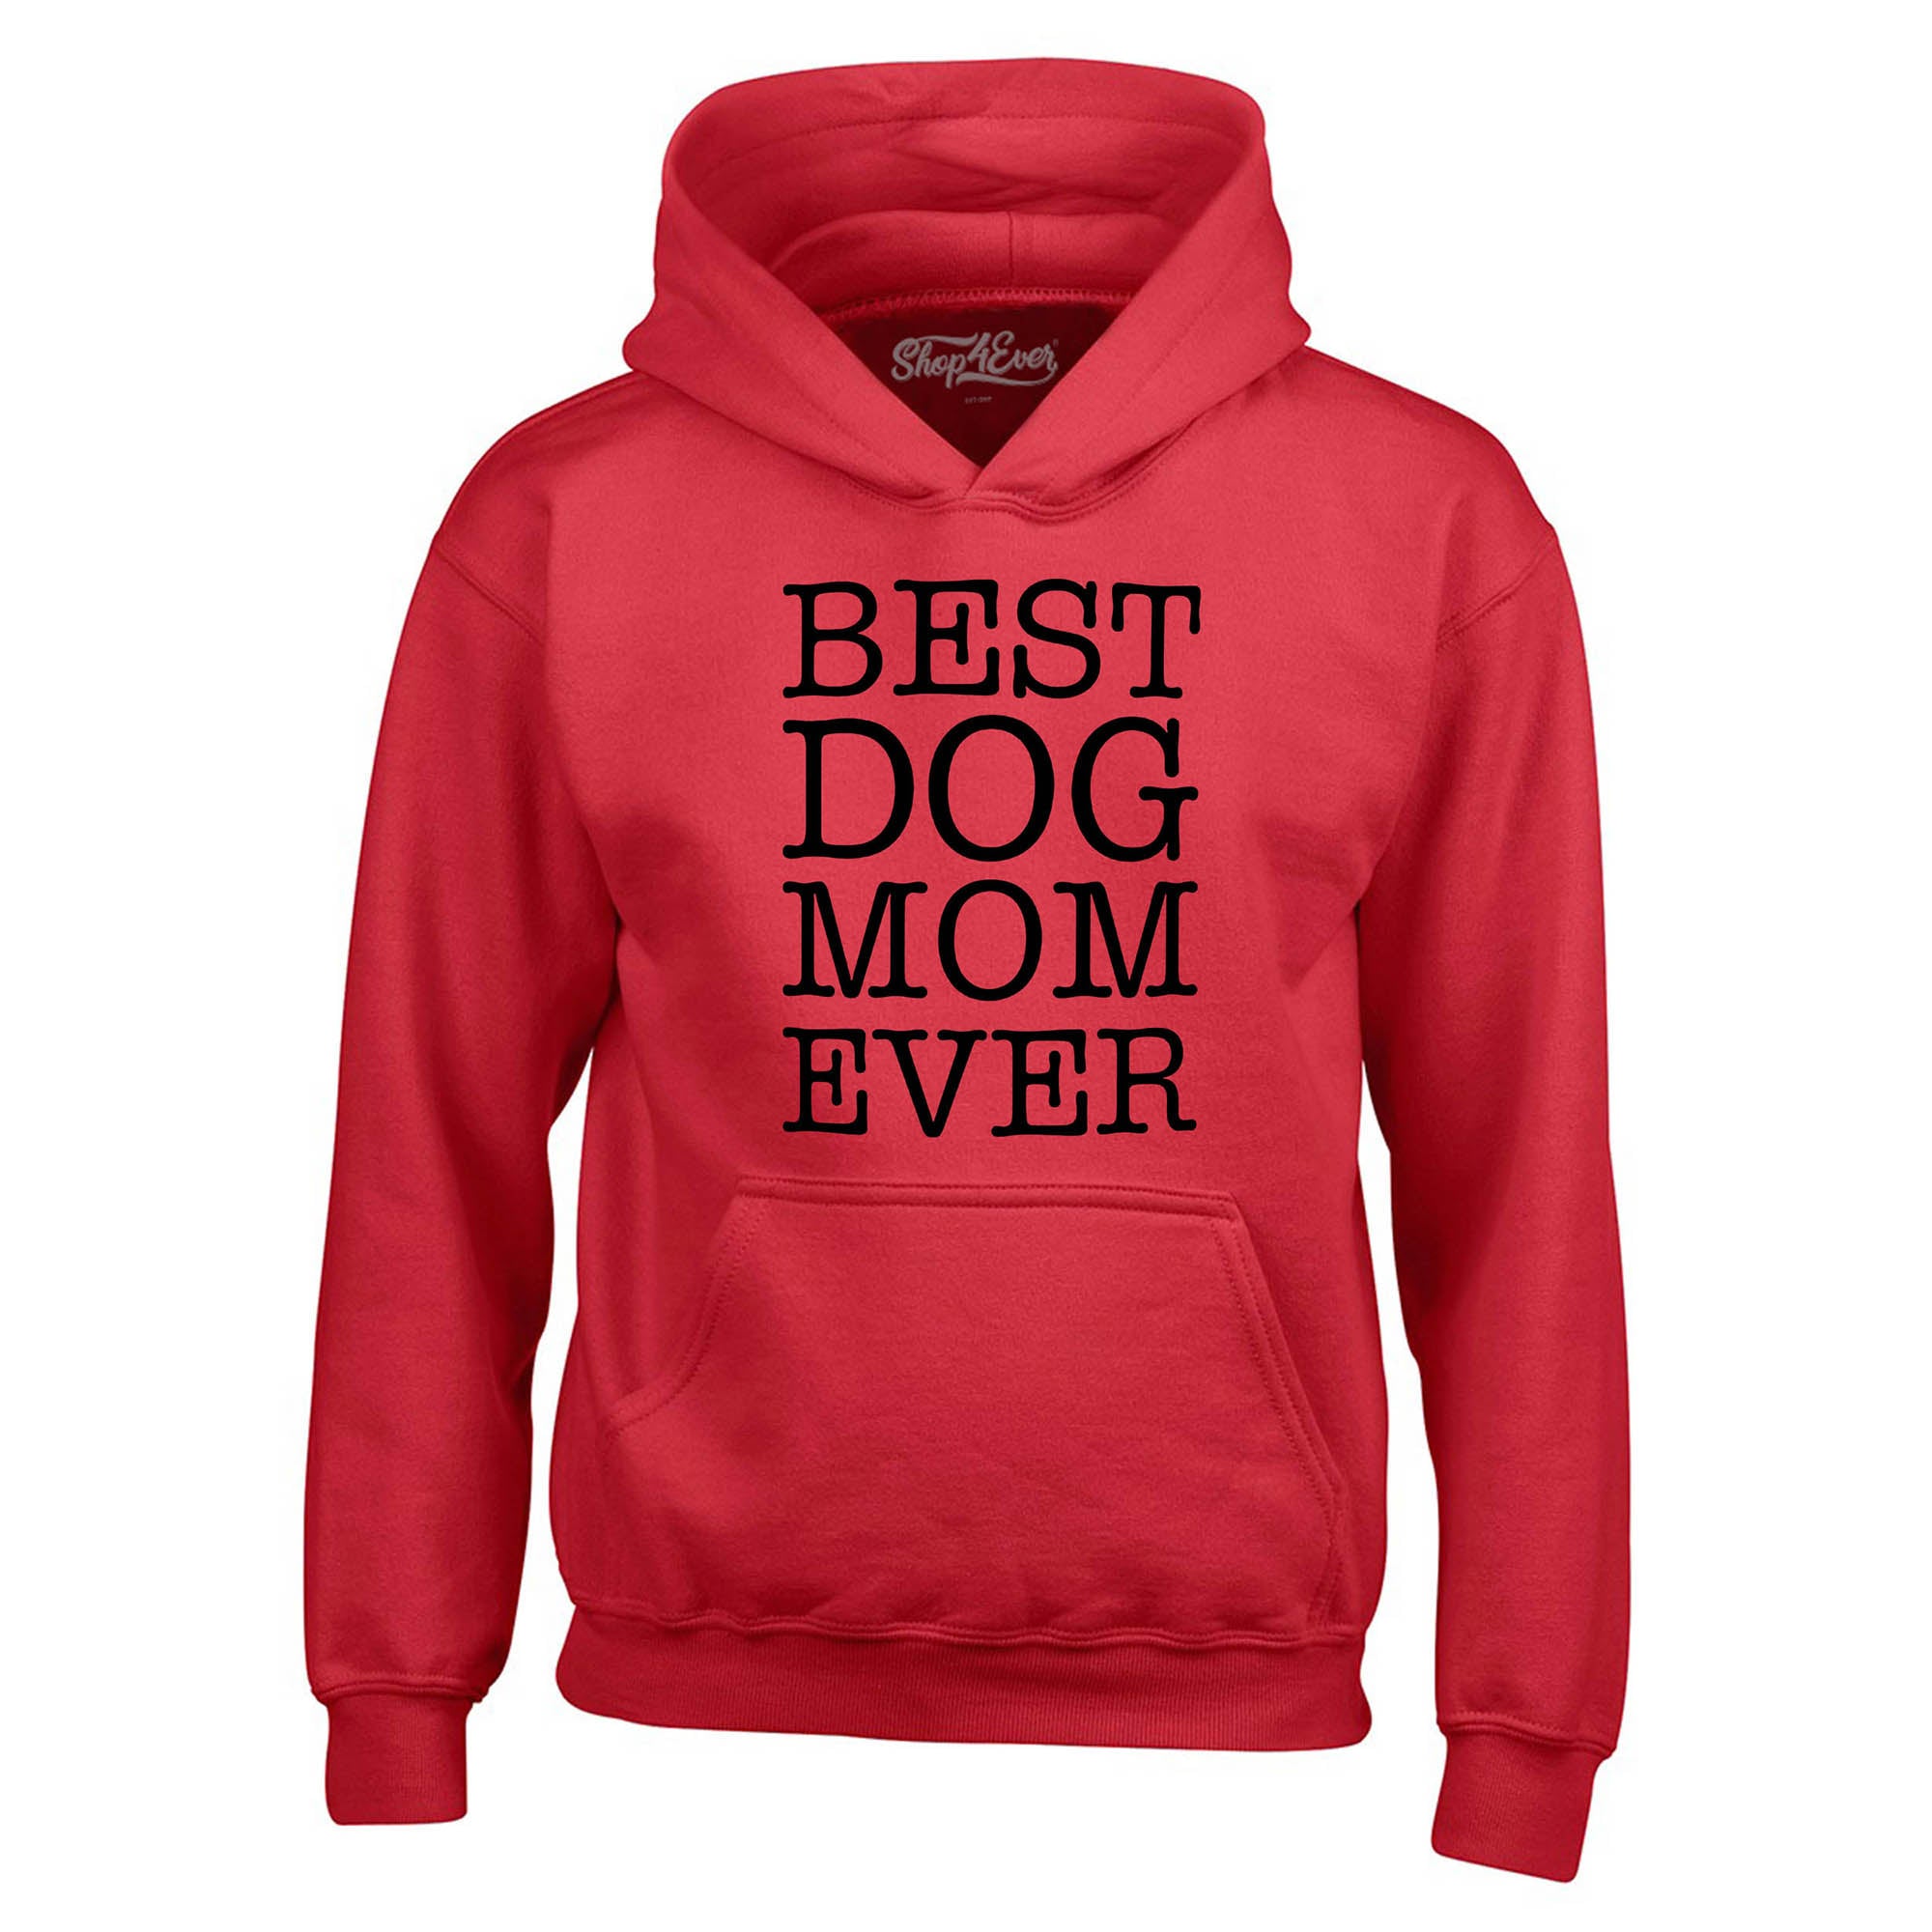 Best Dog Mom Ever Hoodie Sweatshirts